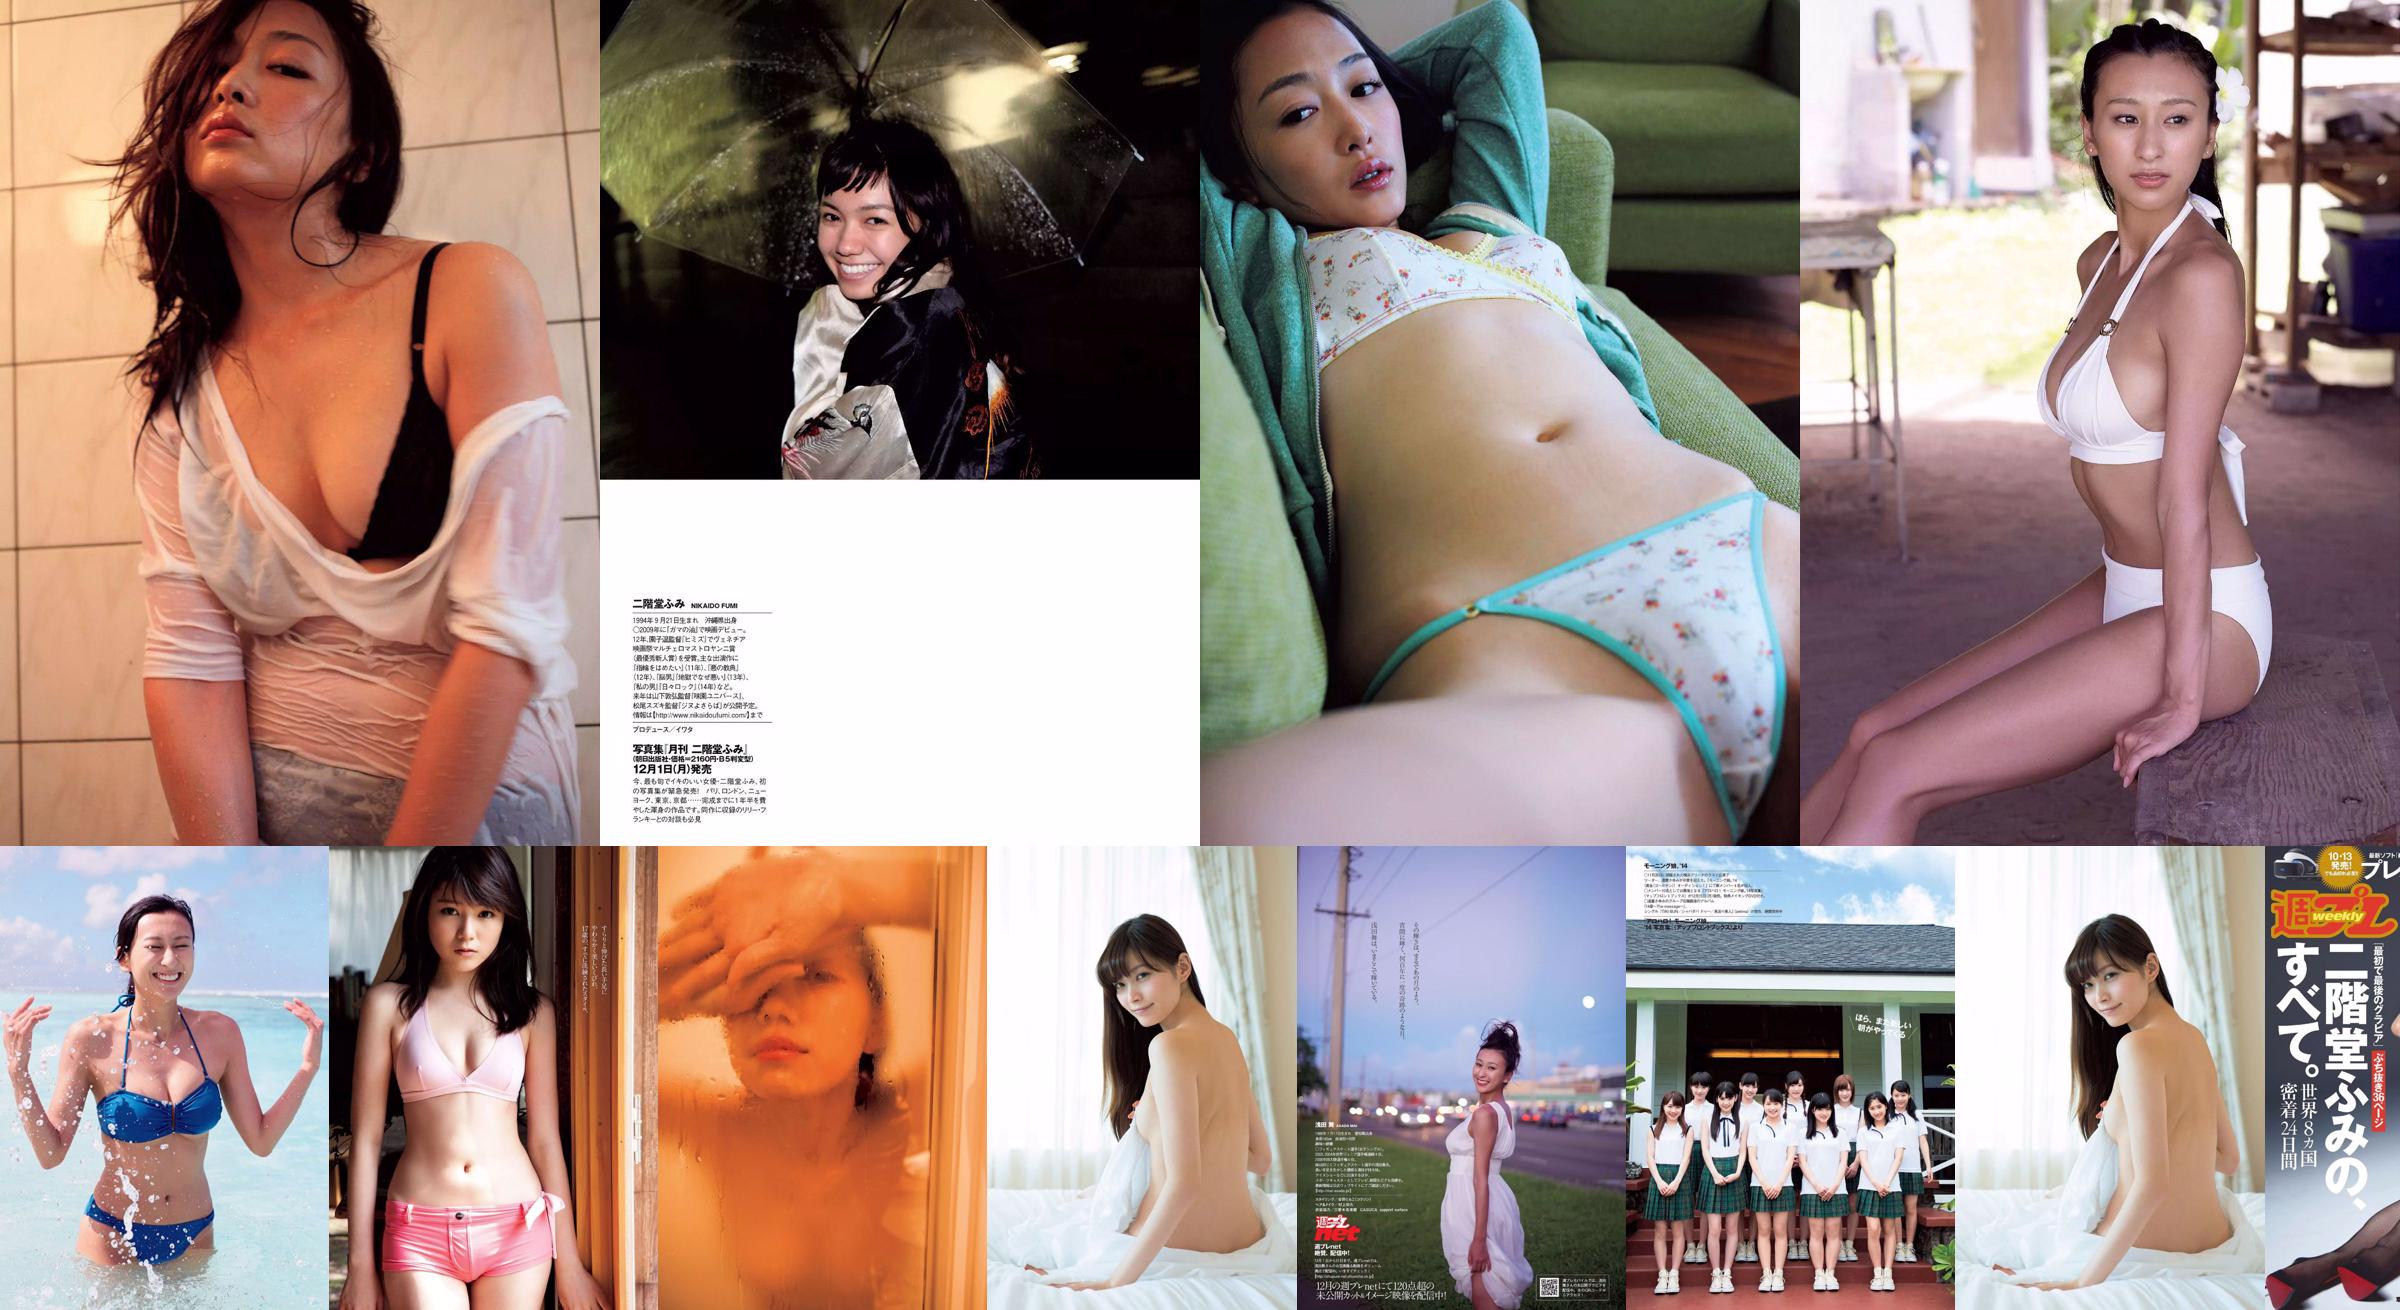 Fumi Nikaido [wekelijkse Playboy] Nr.43 Fotomagazine 2016 No.af1a4c Pagina 1